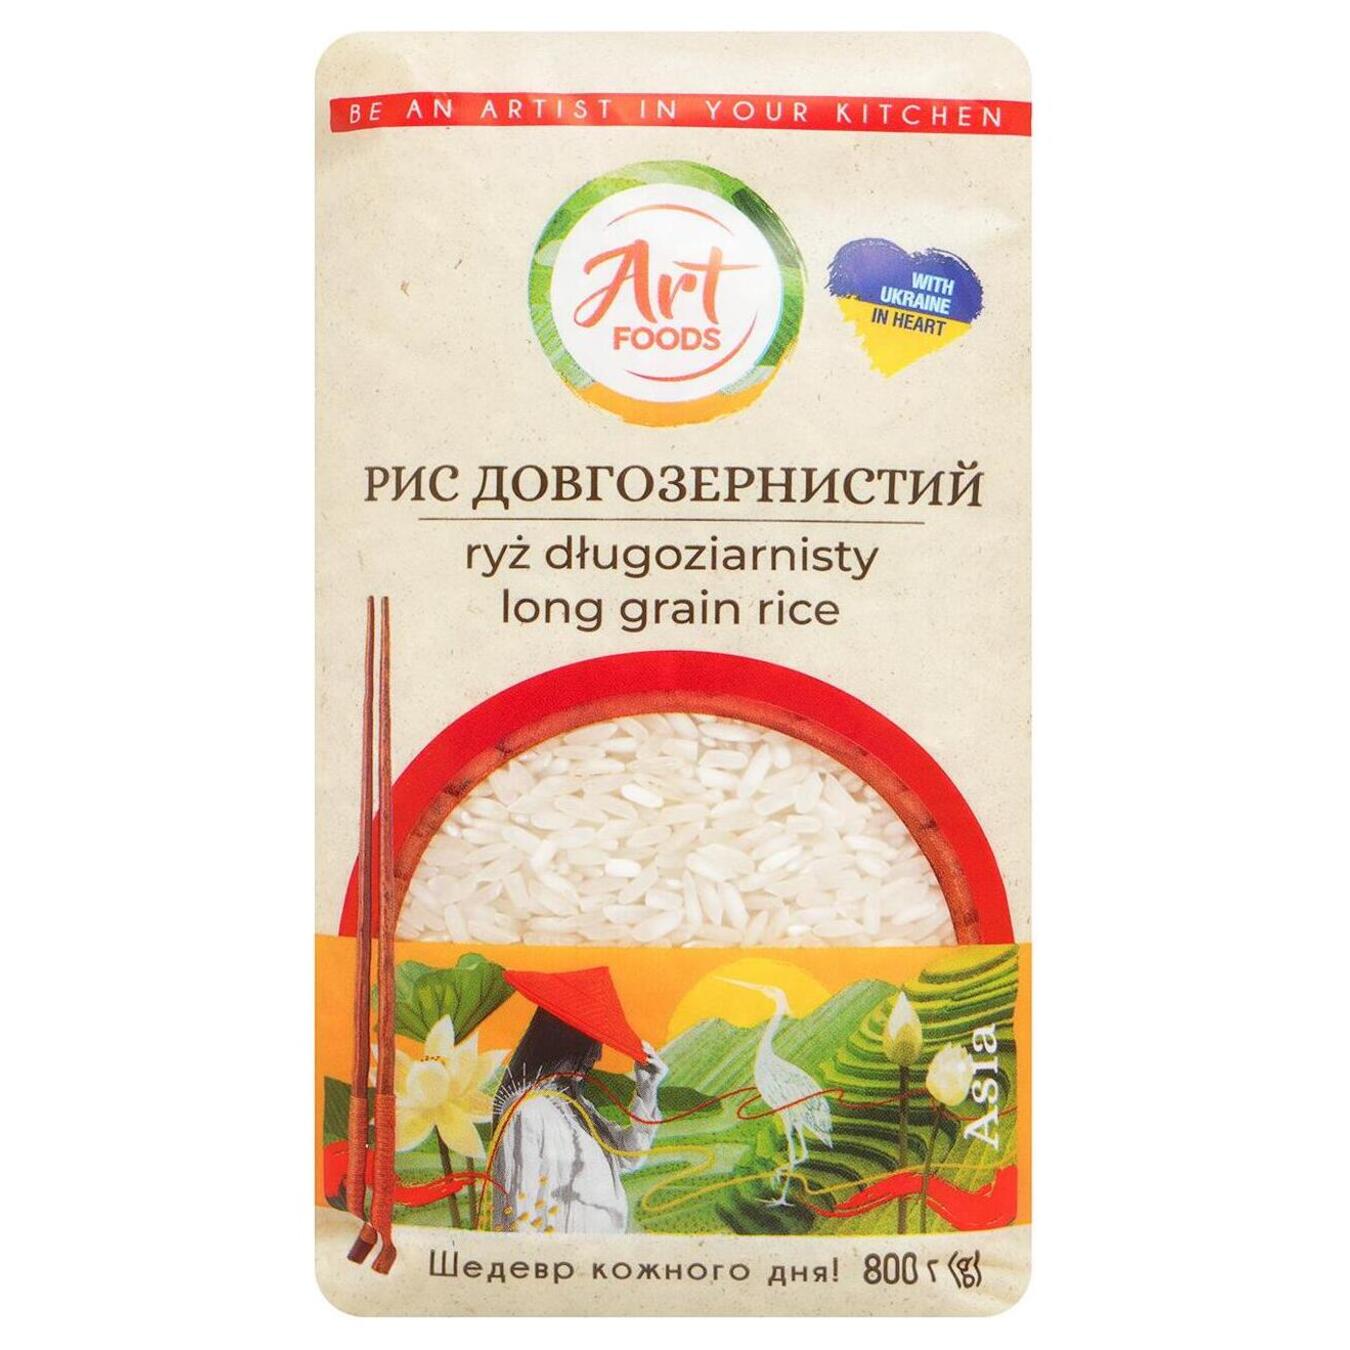 Art Foods long-grain rice 800g